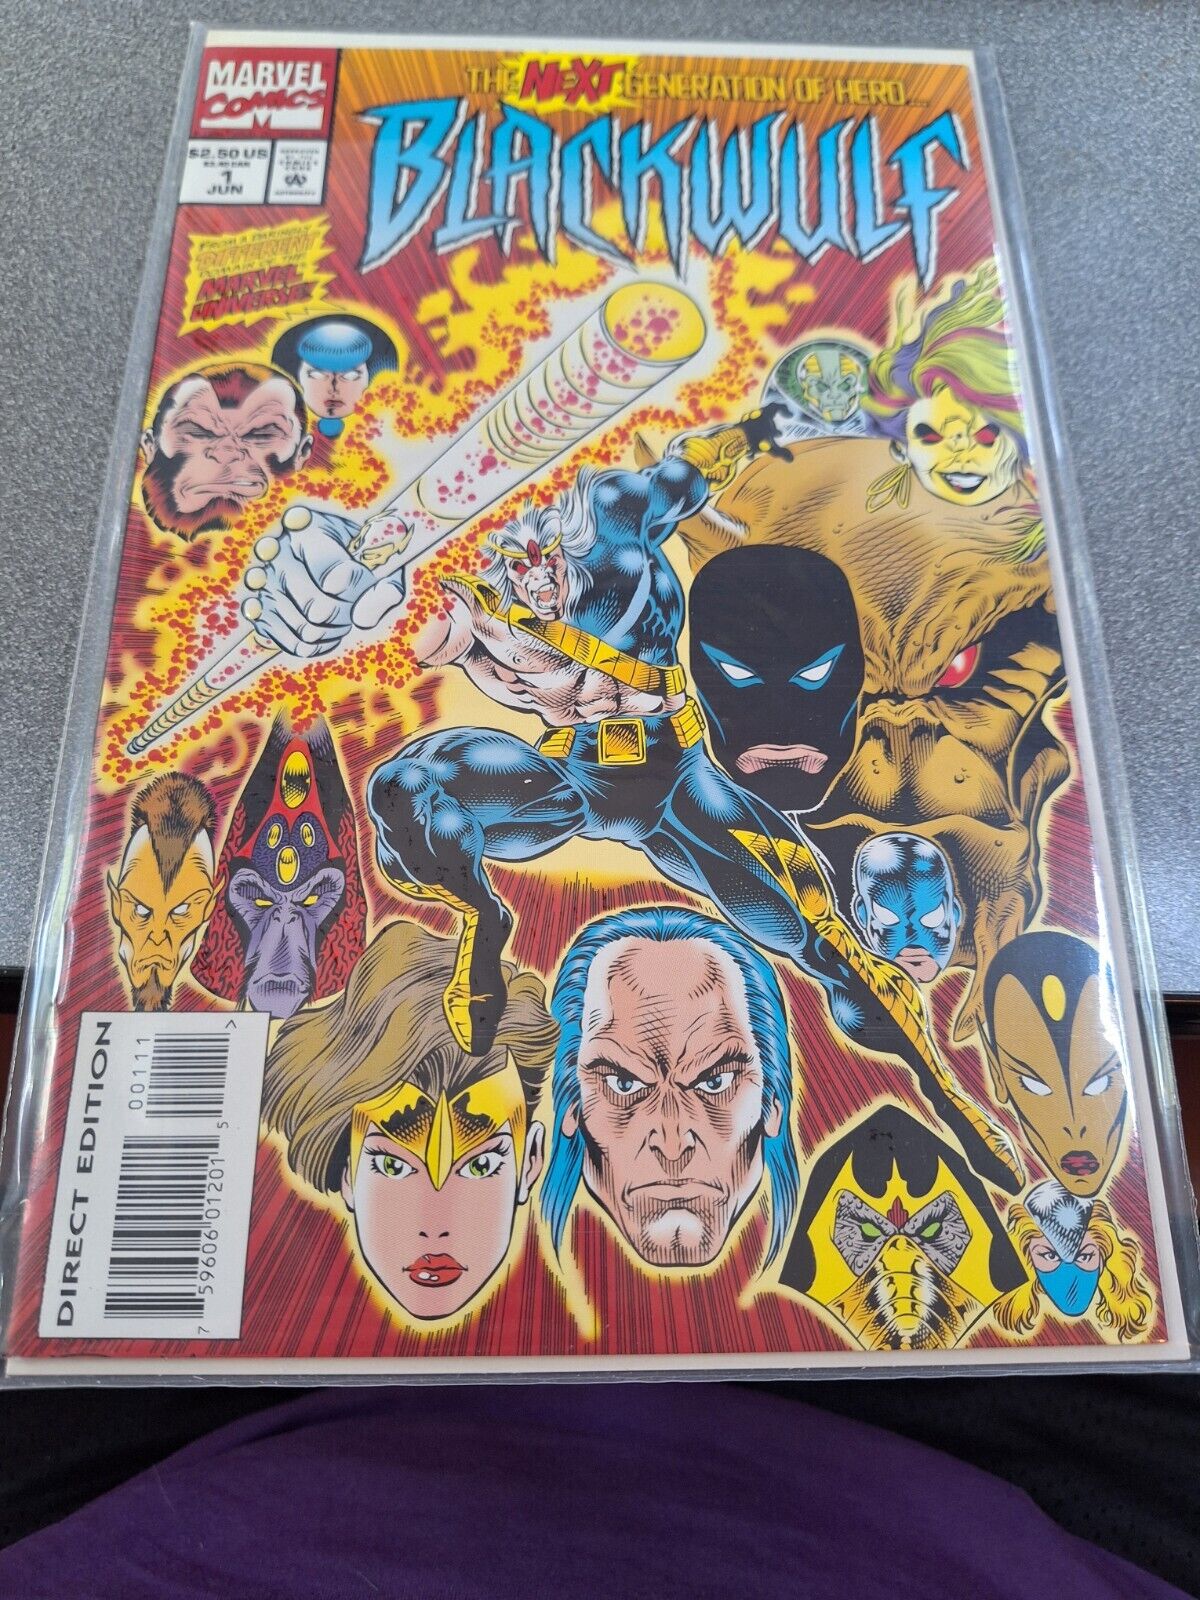 Marvel Comics Blackwulf Issue 1 VF/NM /9-90